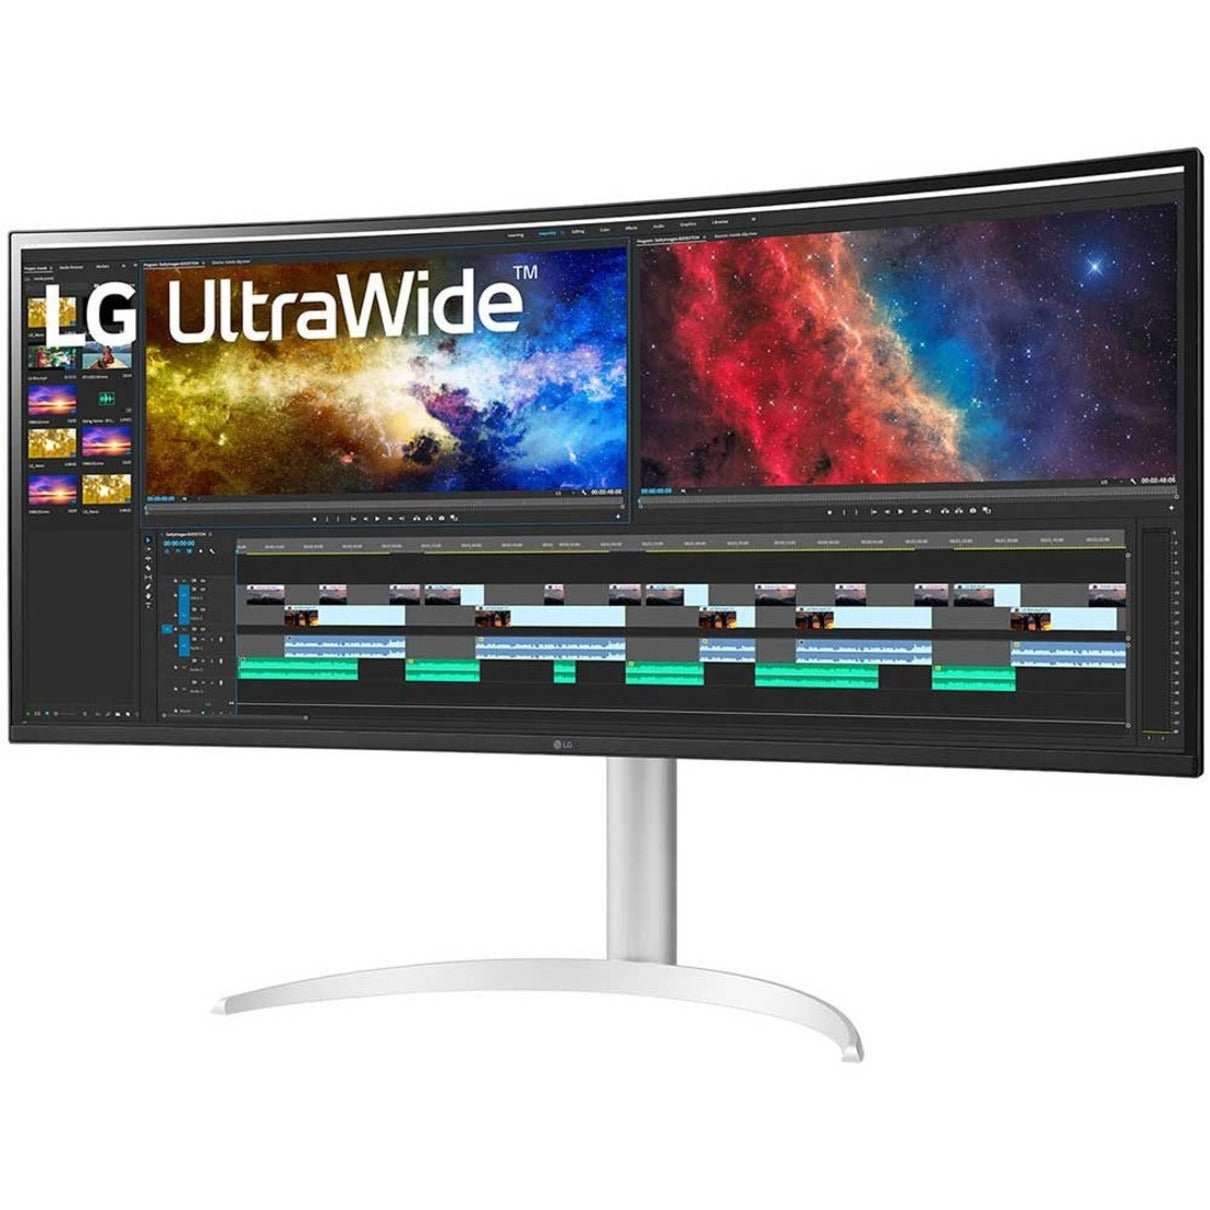 LG Ultrawide 38BP85C-W Widescreen Gaming LCD Monitor, 3840 x 1600, USB Type-C, HDMI, DP, AMD FreeSync, 2HDMI, 300 Nit, 95% DCI-P3 (CIE 1976), 1.07 Billion Colors, 3 Year Warranty